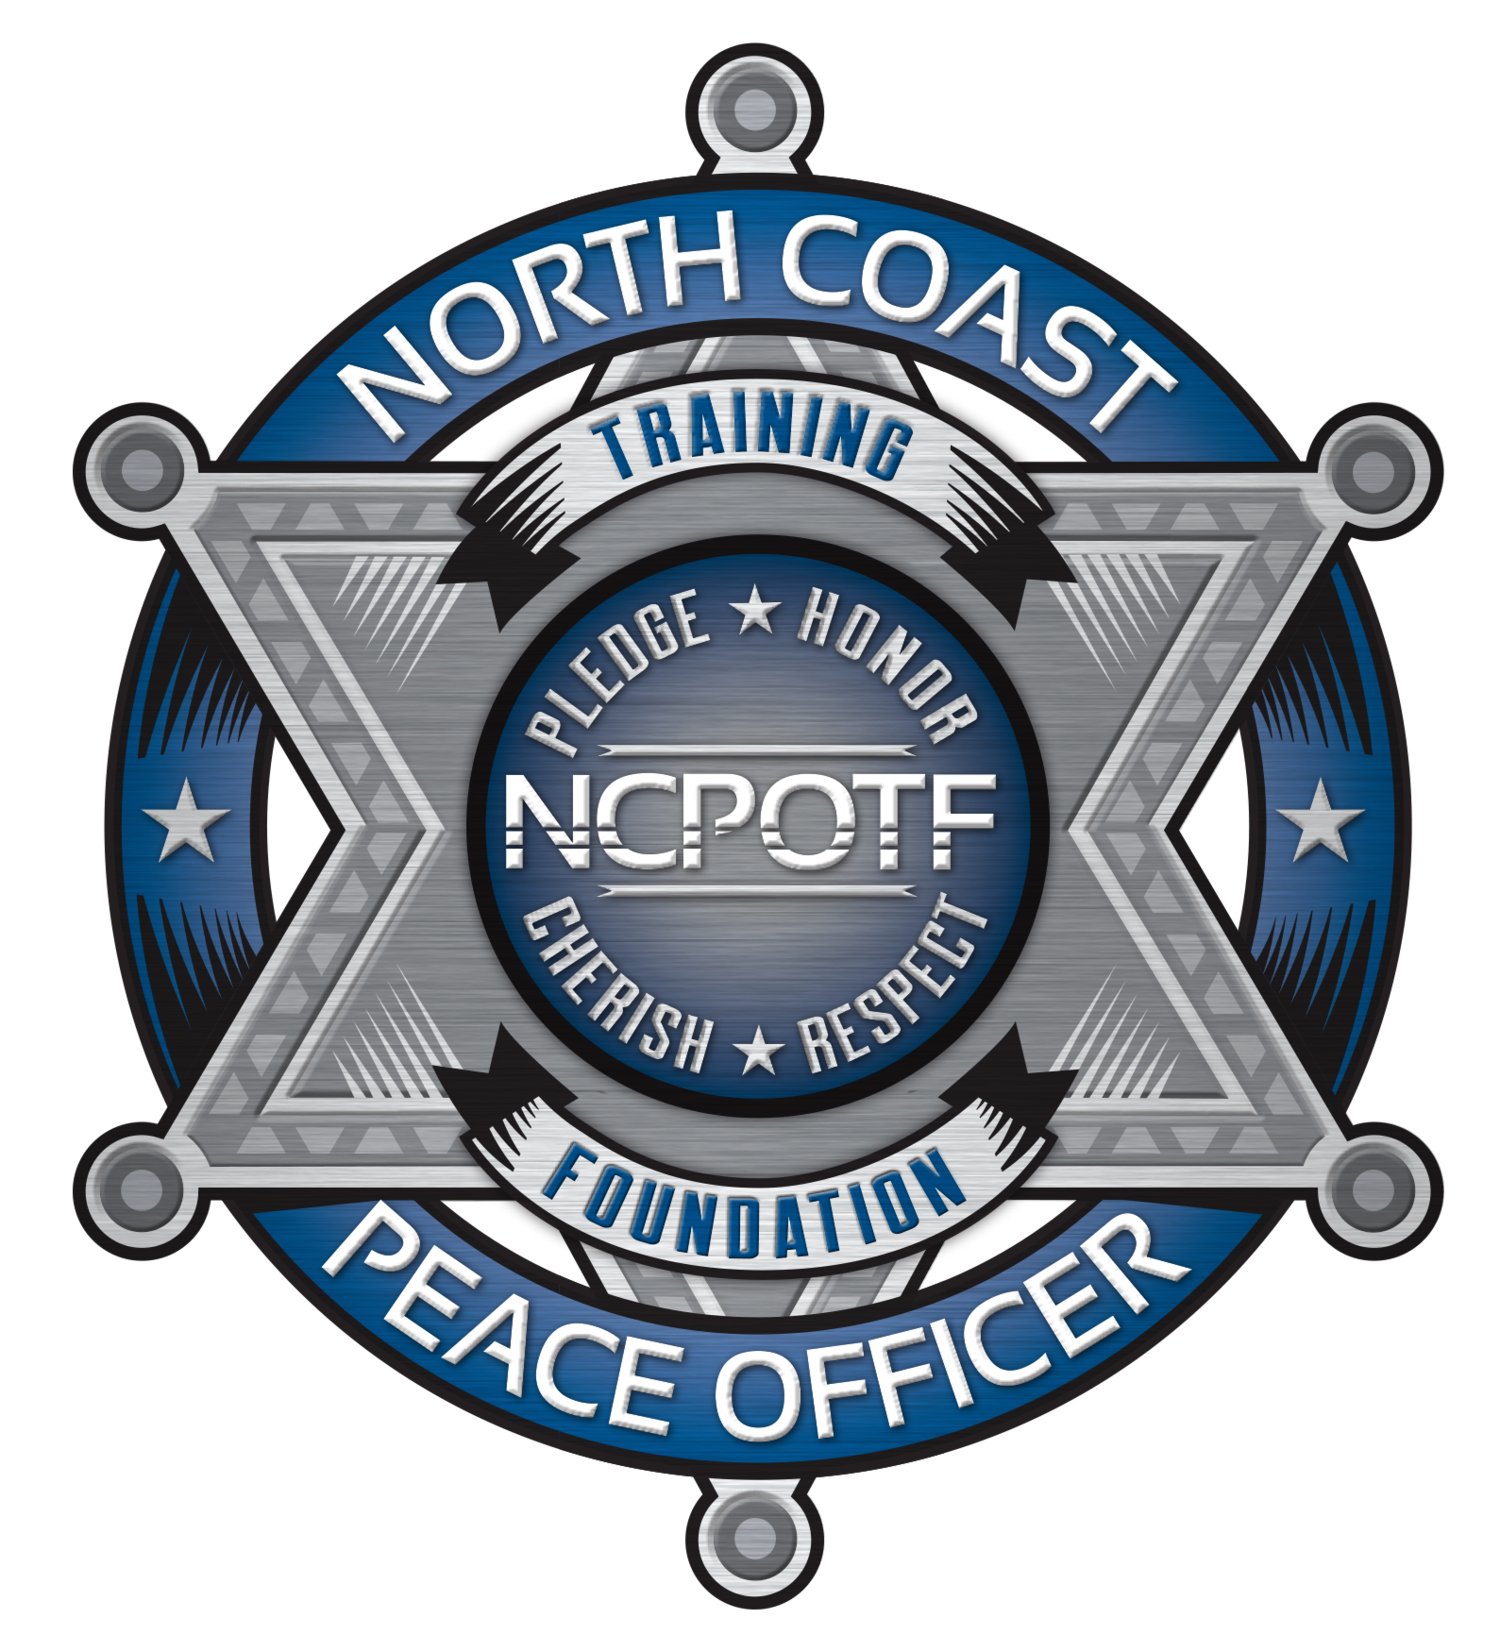 NORTH COAST PEACE OFFICER TRAINING FOUNDATION